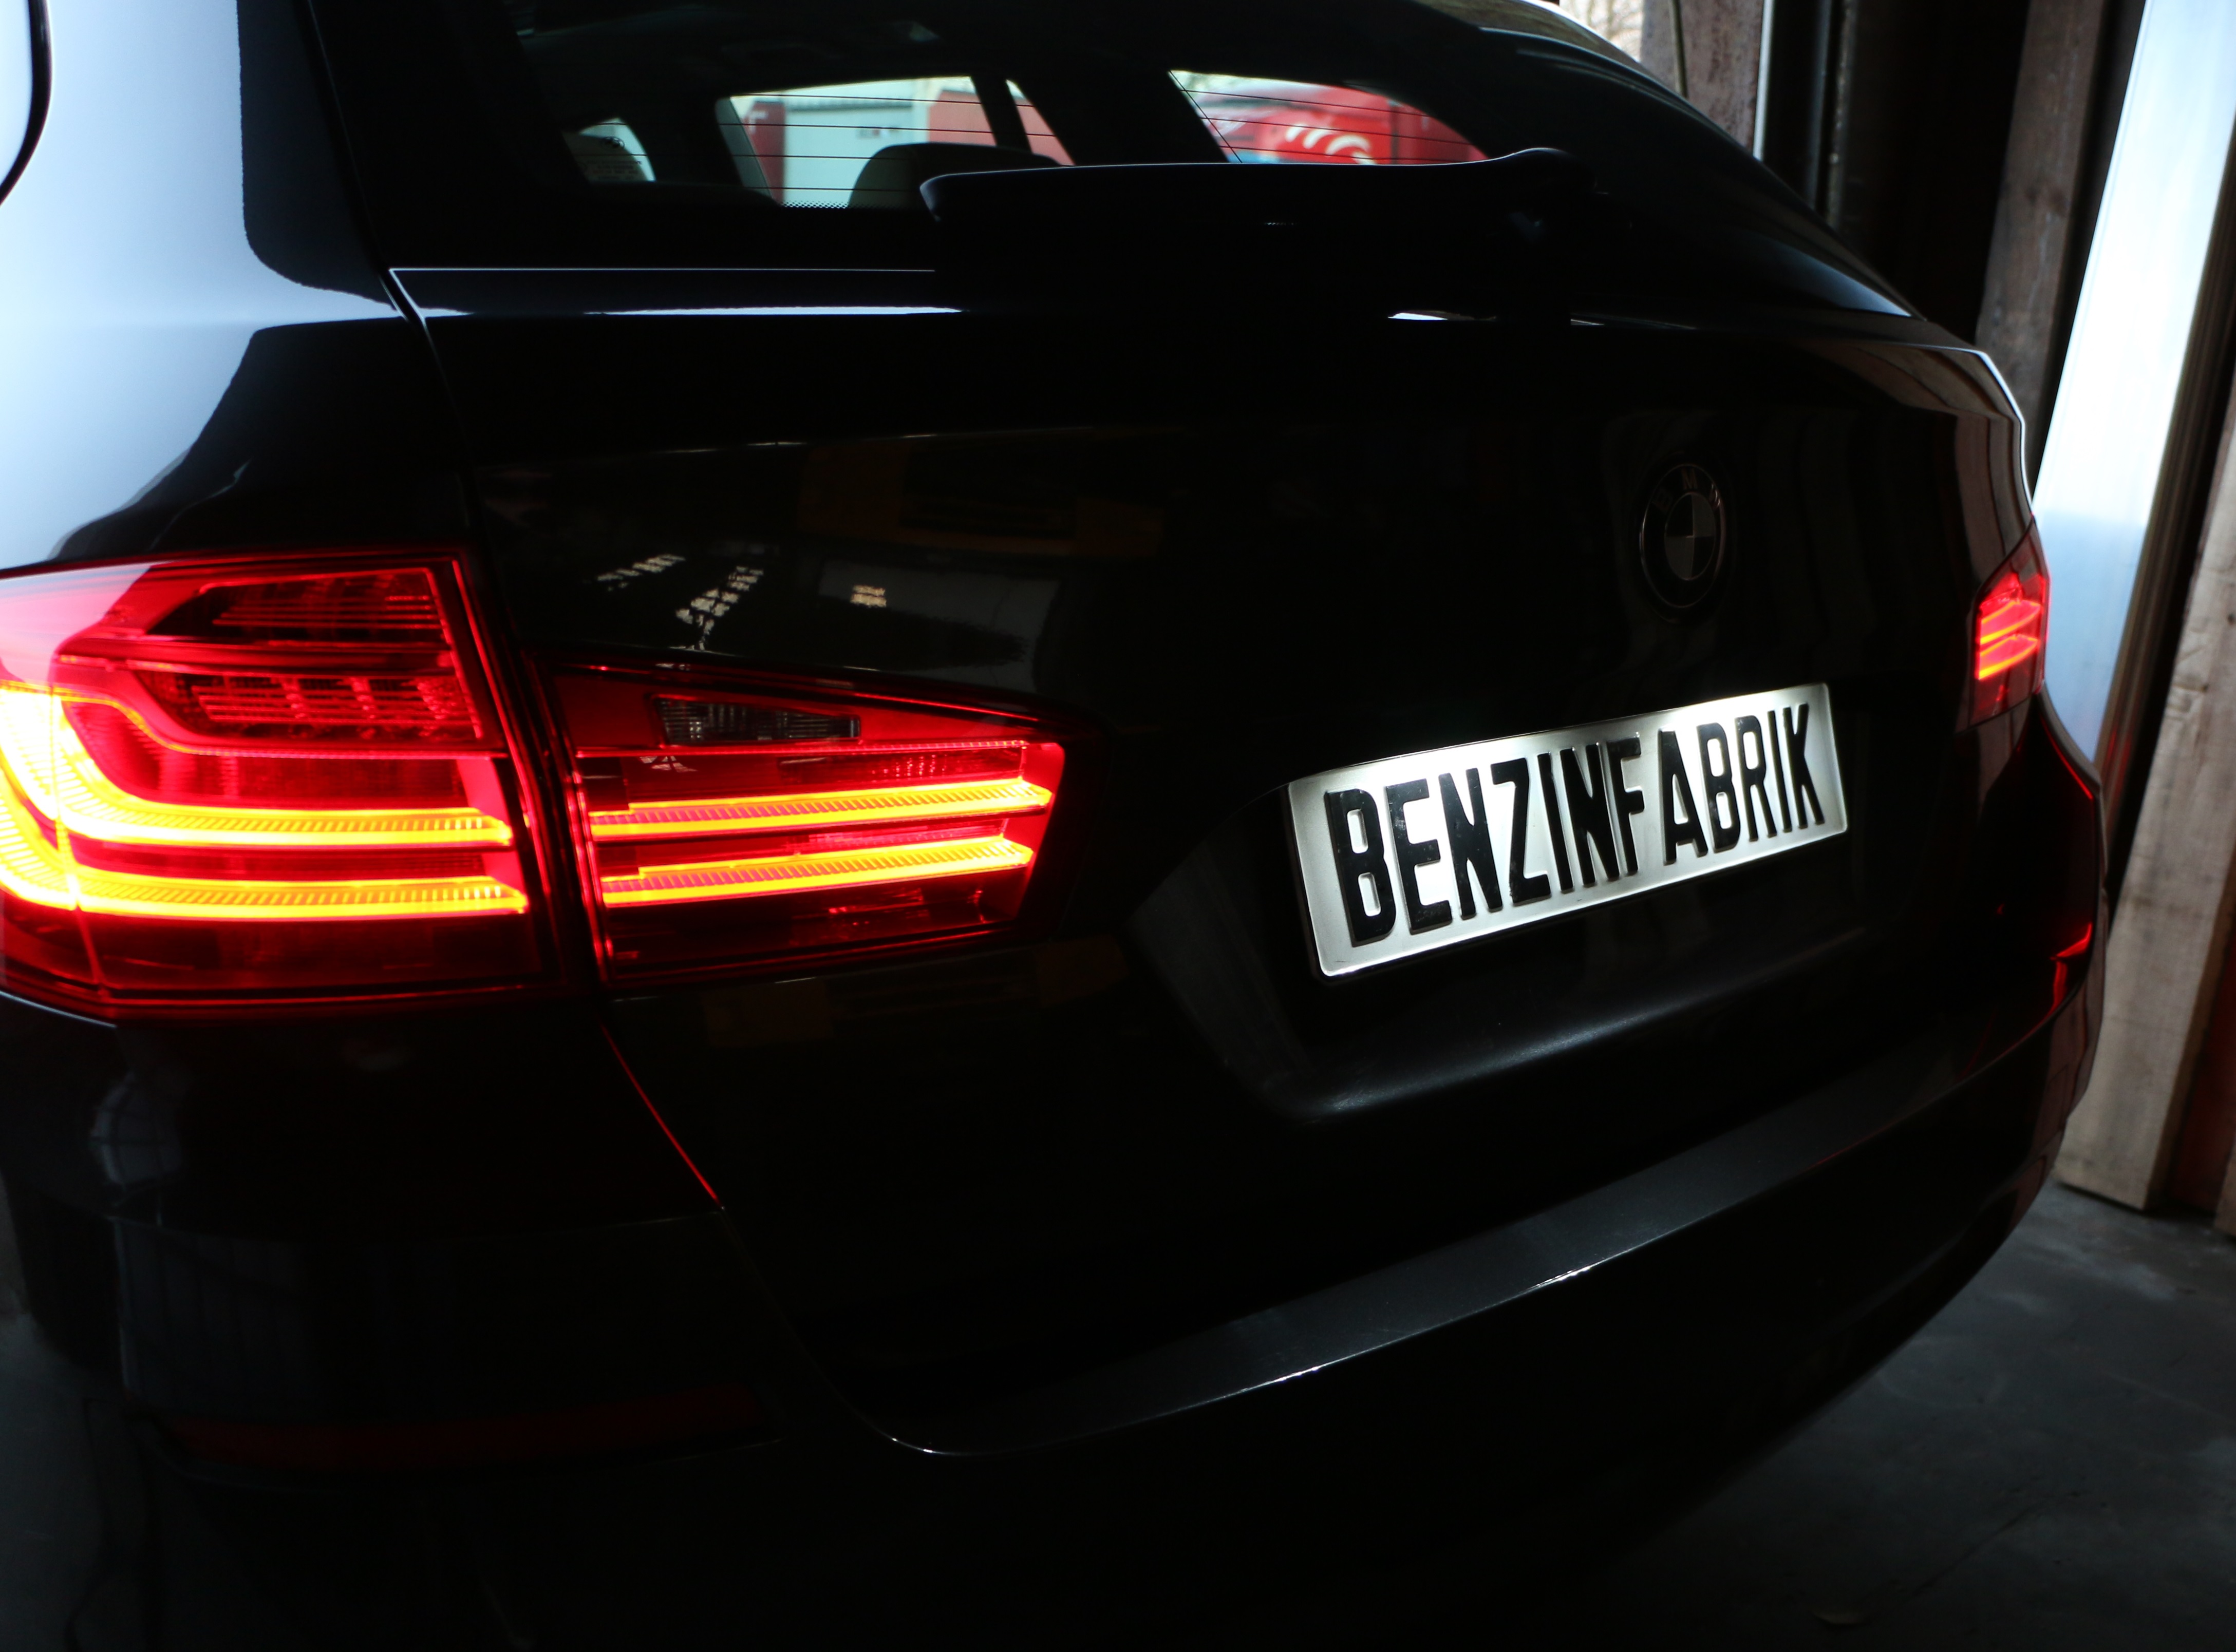 LED Kennzeichenbeleuchtung Module Audi A4 B6 Bj. 00-04, mit E